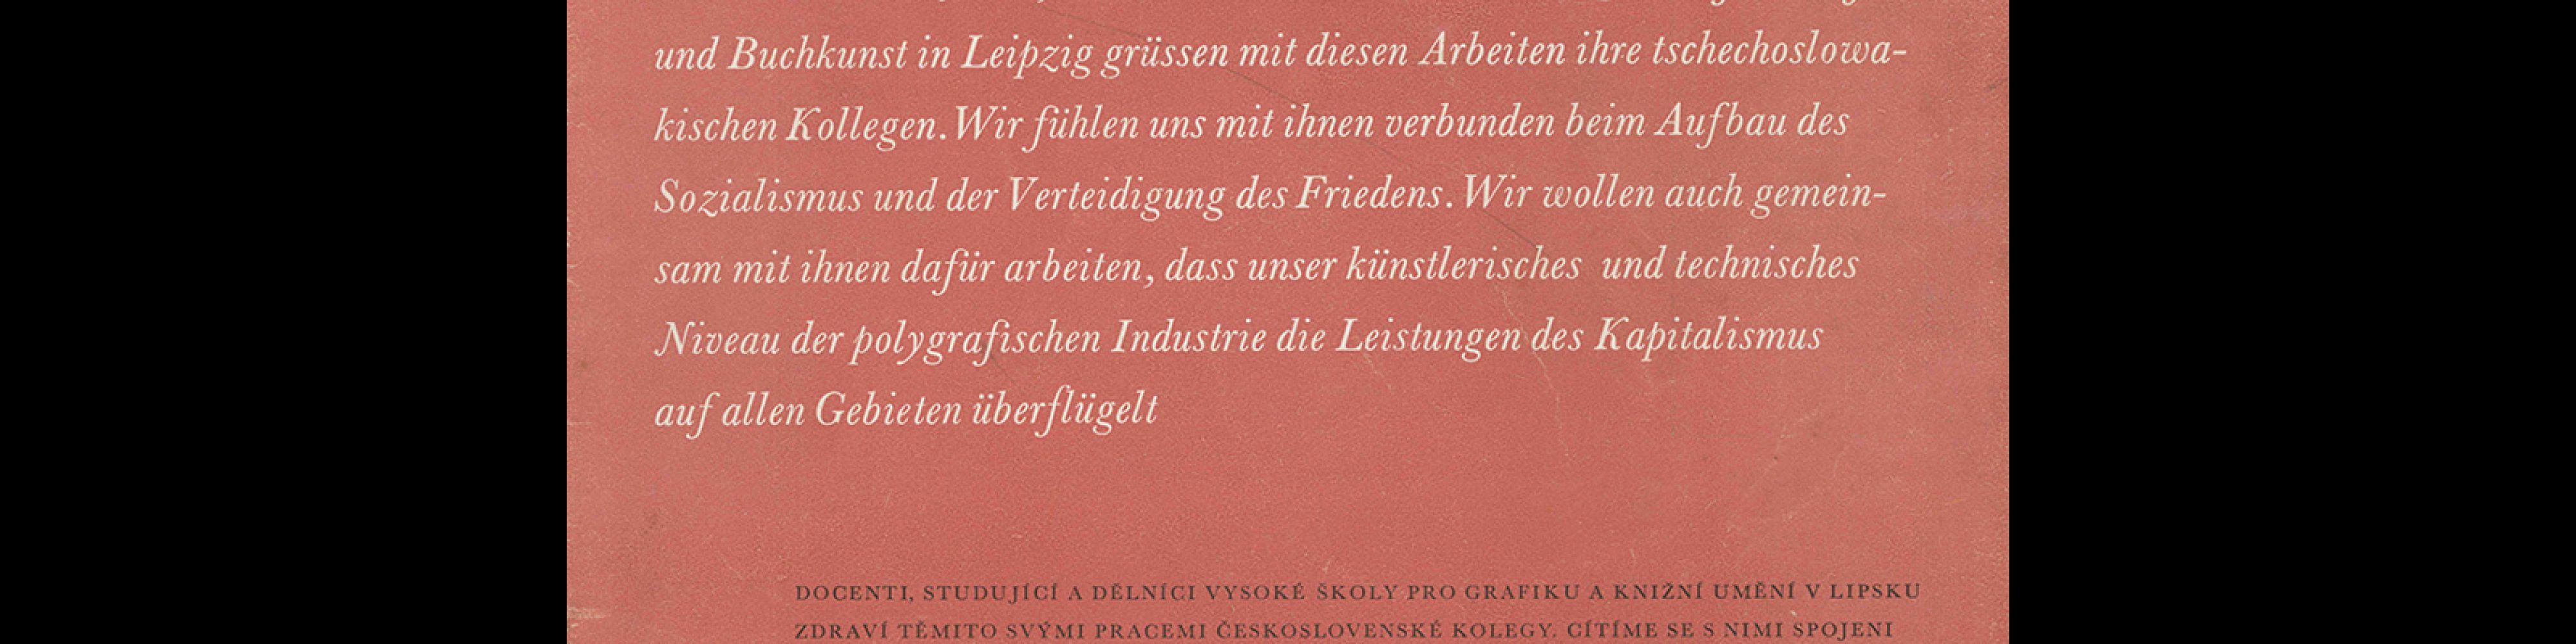 Typografia, ročník 59, 01, 1956. Cover design Oldřich Hlavsa.